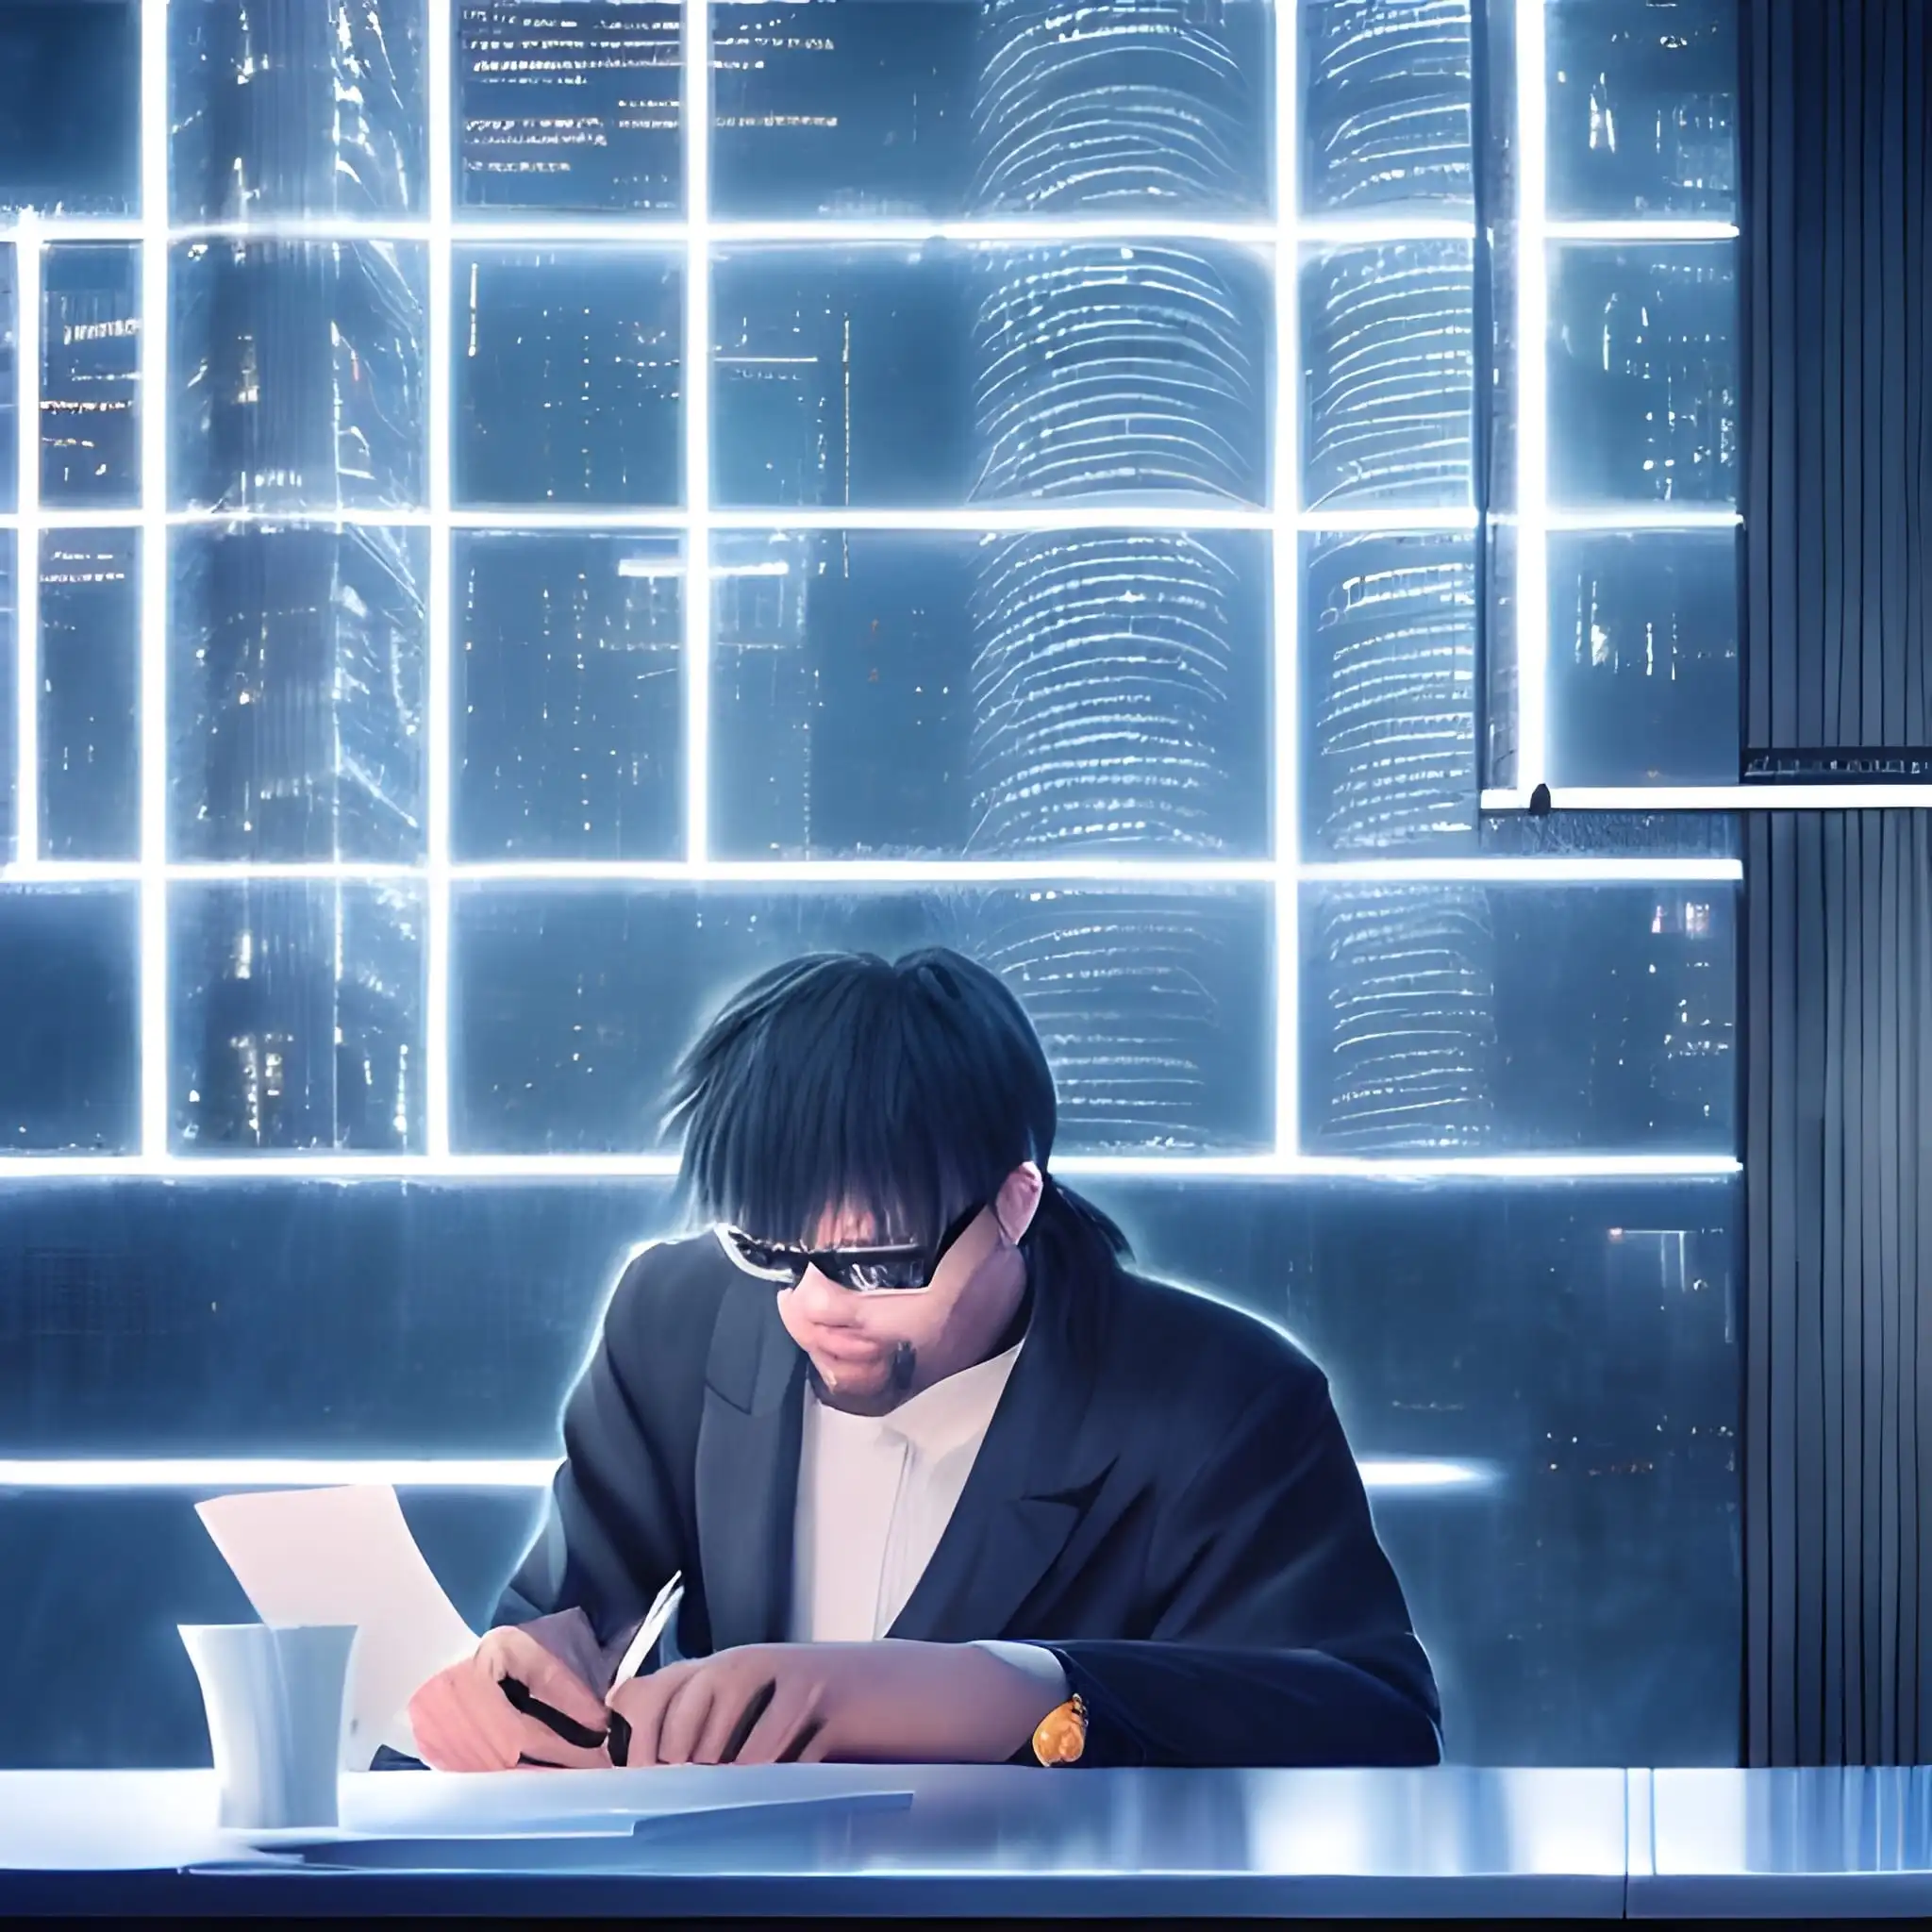 A futuristic man sitting at a desk writing in a diary